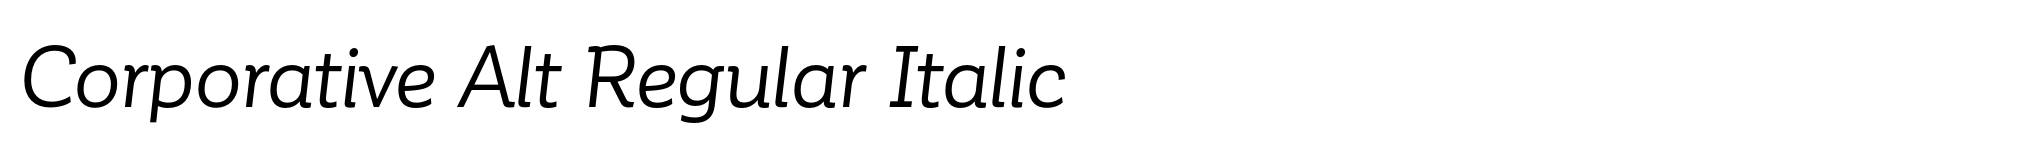 Corporative Alt Regular Italic image